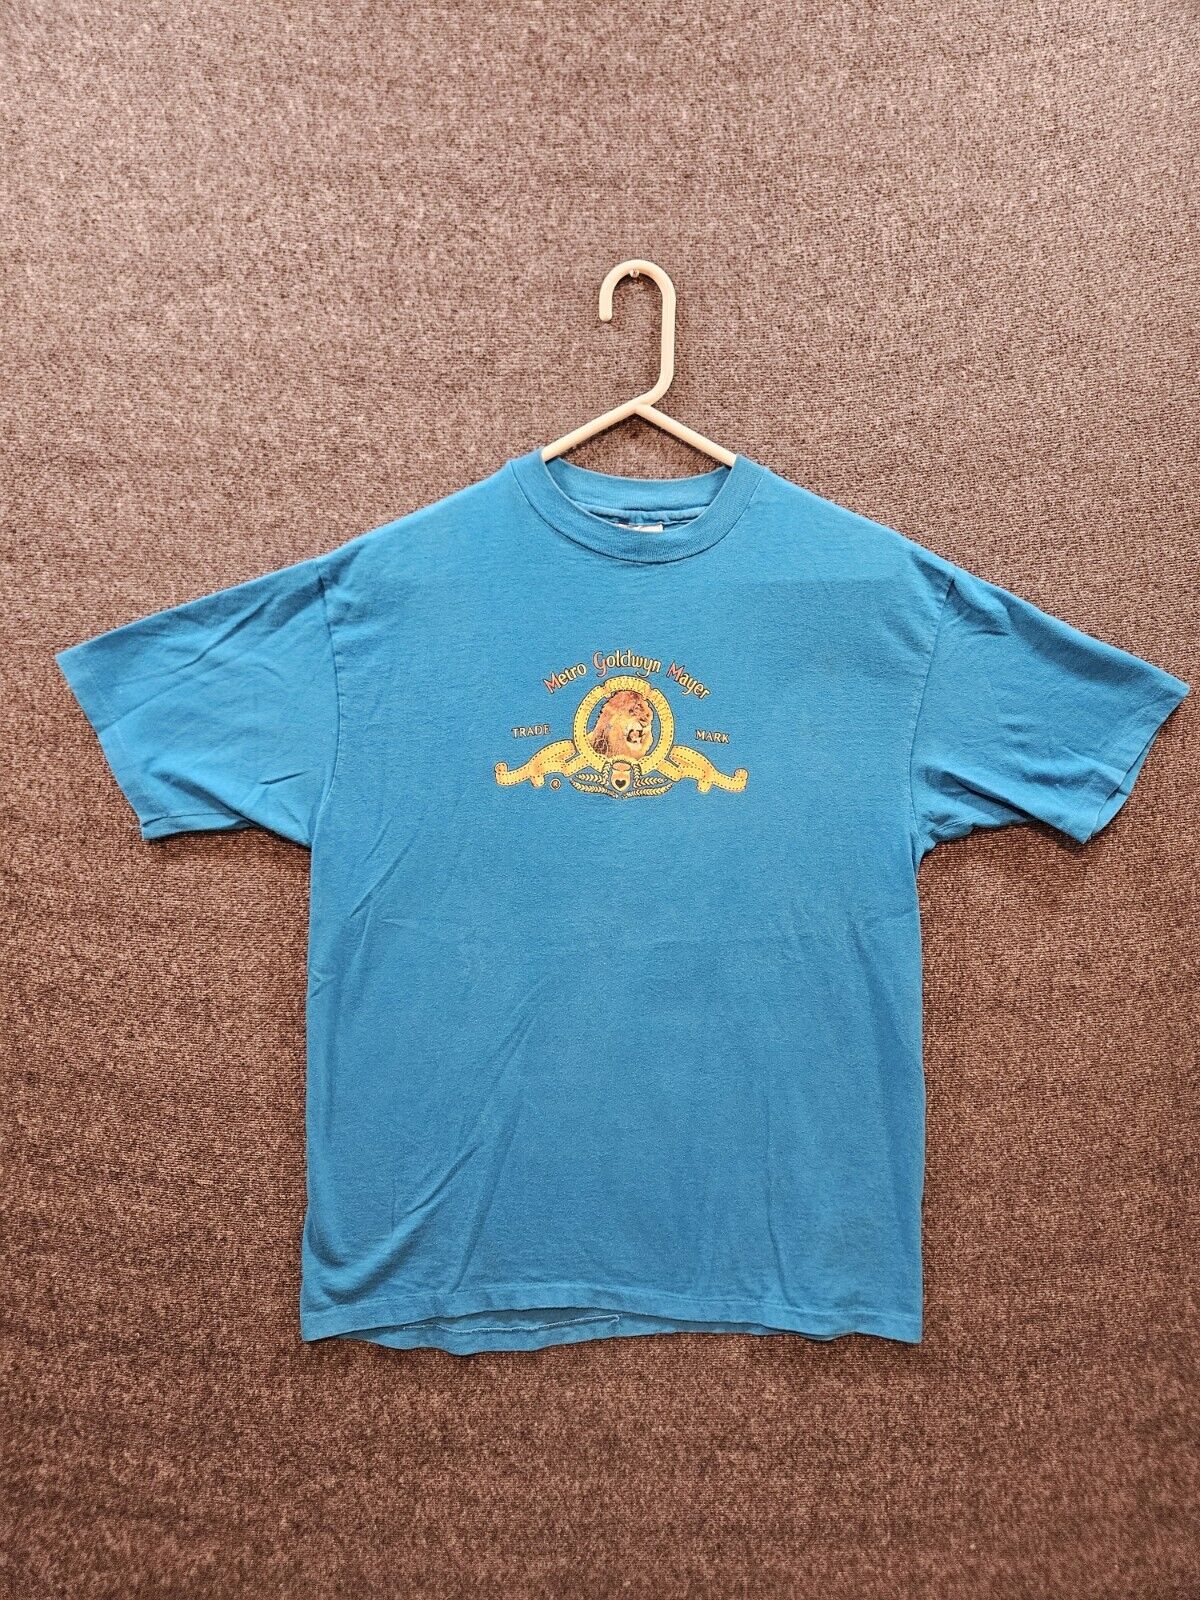 Vintage MGM Metro Goldwyn Mayer T-shirt Single-Stitch 1980s Blue Used Condition 